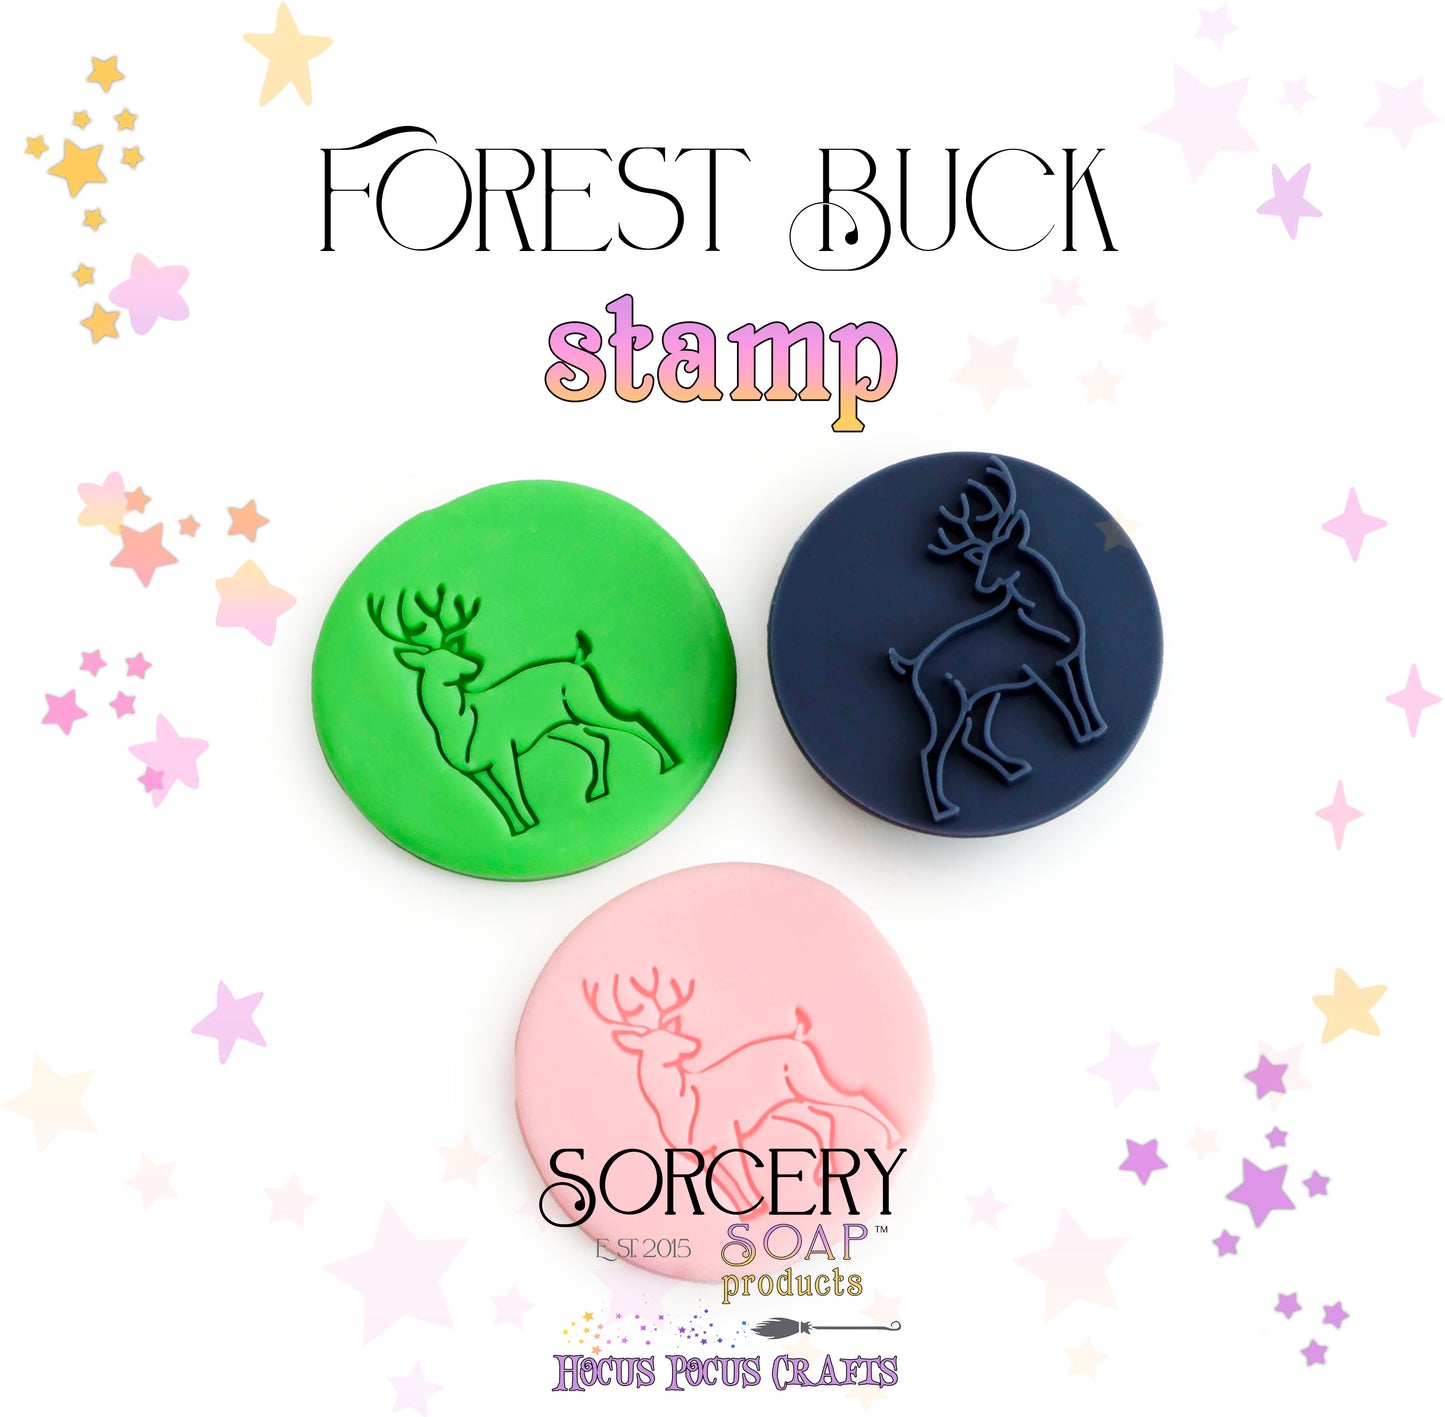 Forest - Buck Stamp